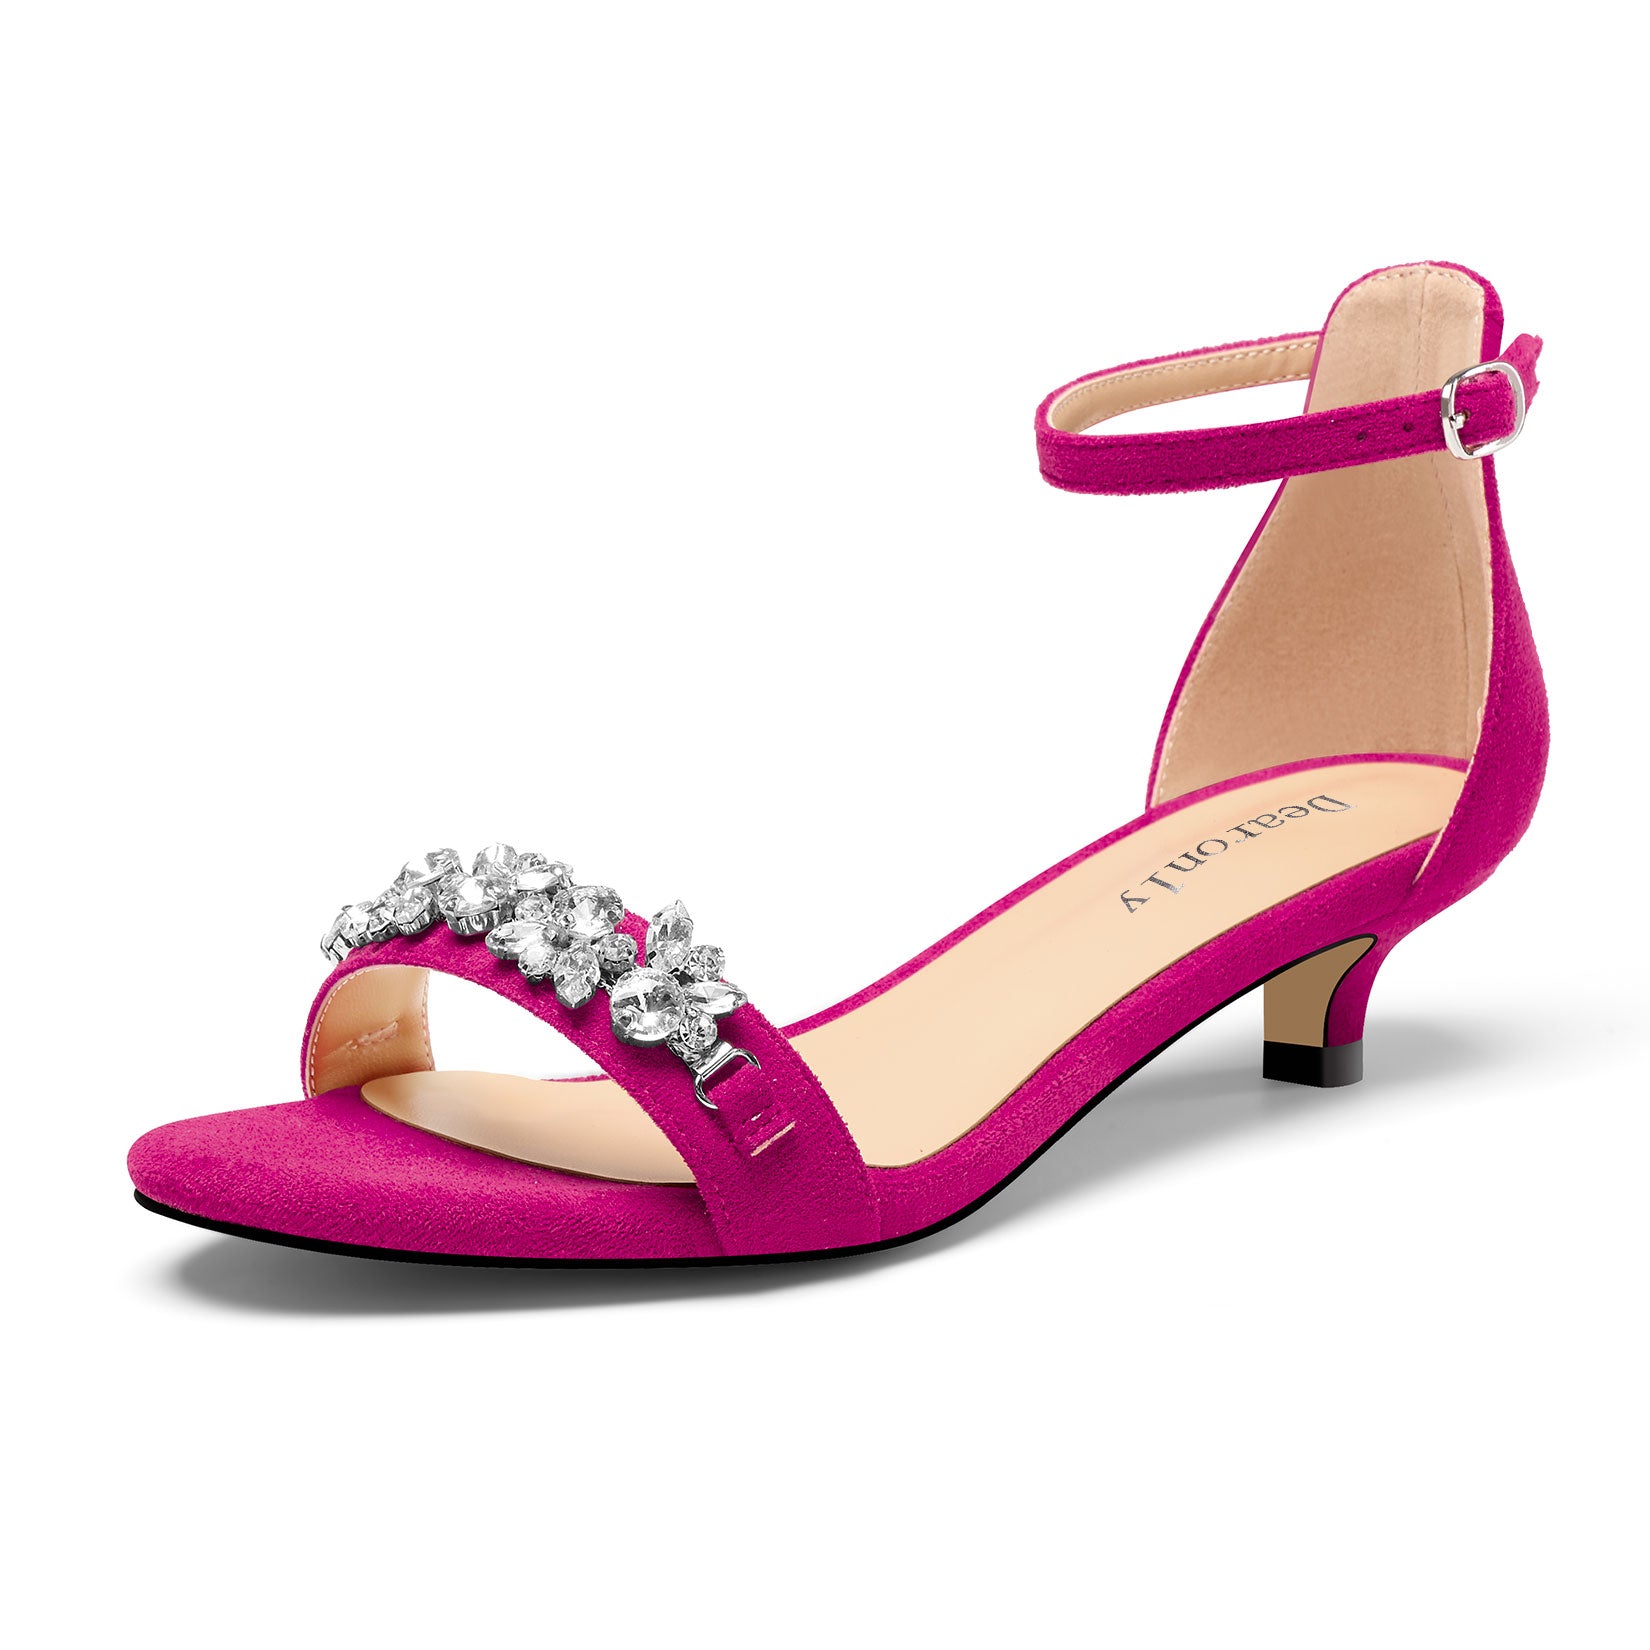 30 Chic Low Heel Wedding Shoes | Junebug Weddings | Lace up heels, Heels,  Prom shoes